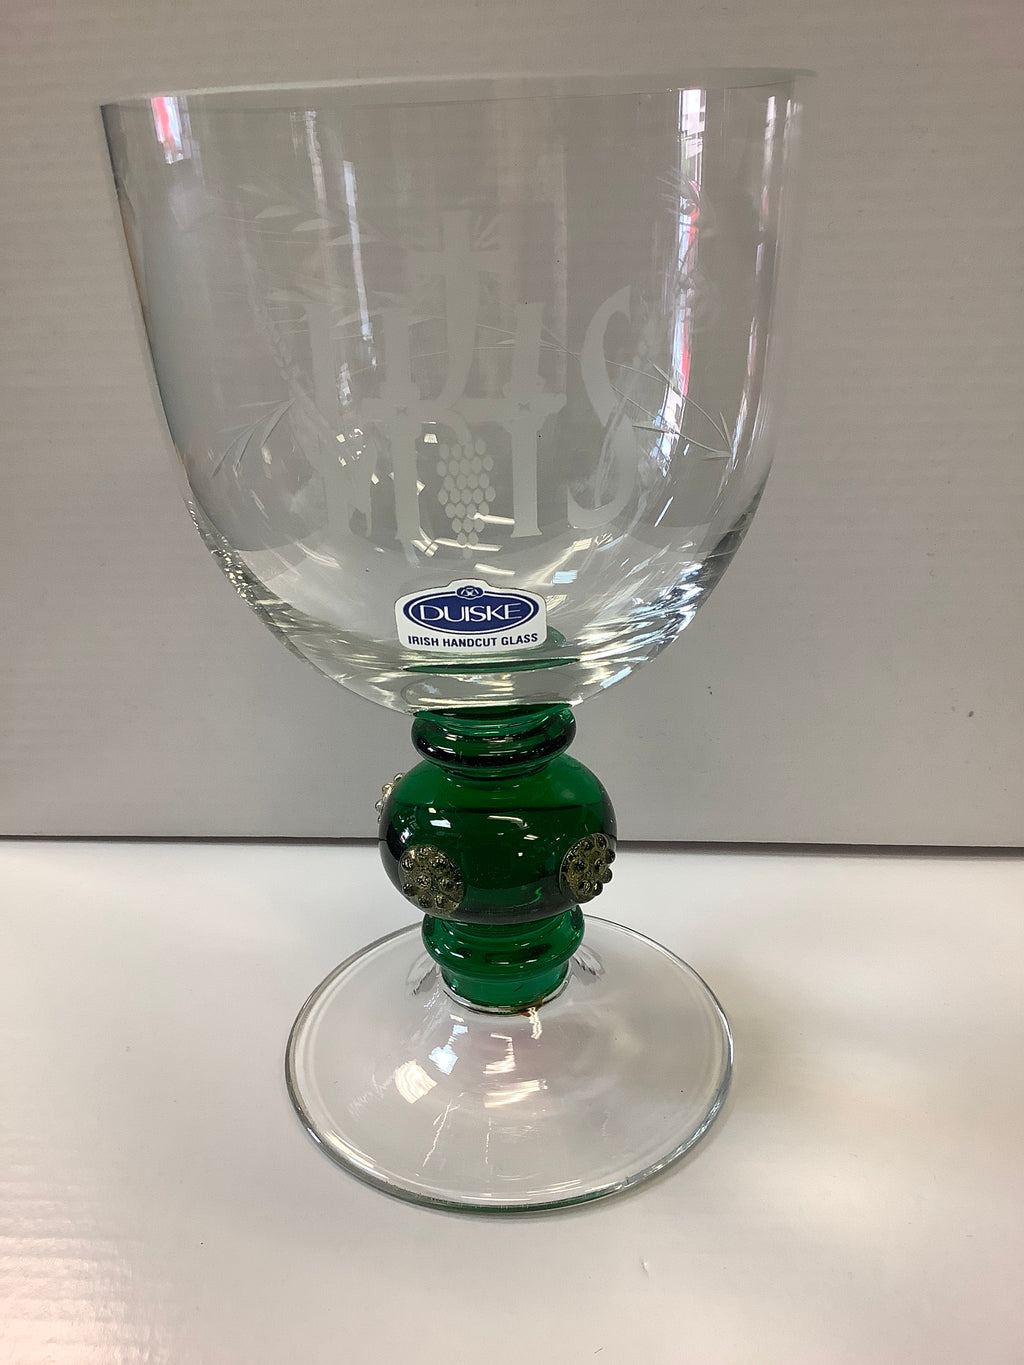 Irish handout glass chalice